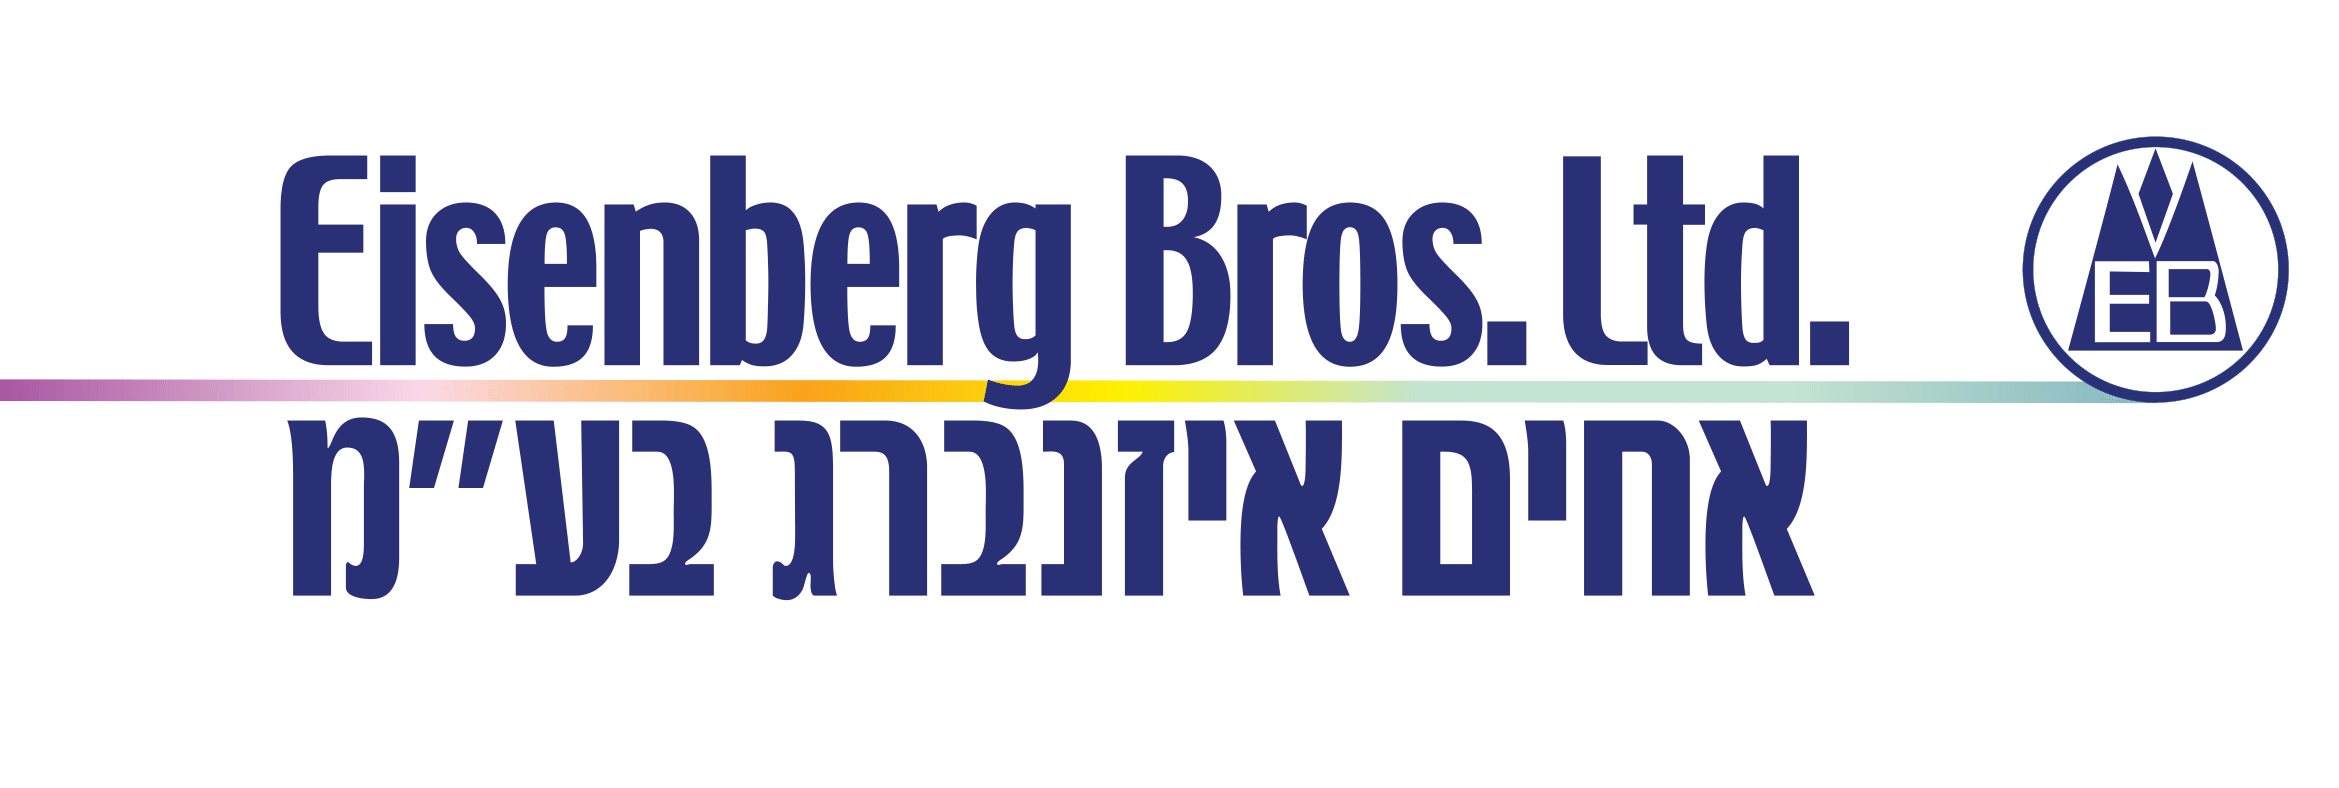 Eisenberg Bros Ltd